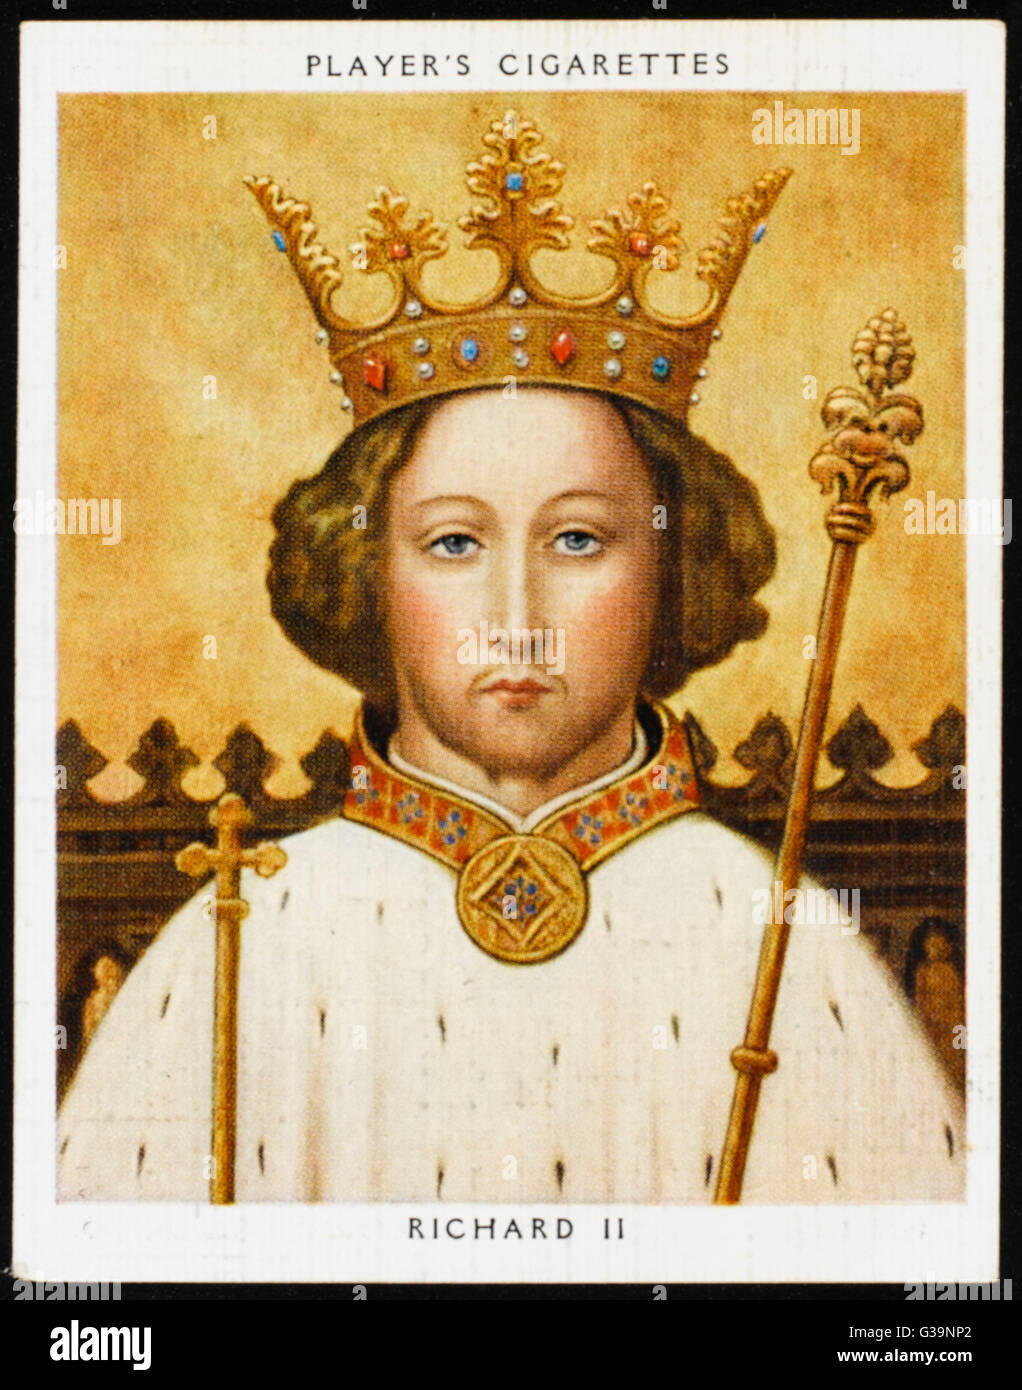 RICHARD II, roi d'Angleterre (1367 - 1400) 1377 - 1399 Règne Banque D'Images